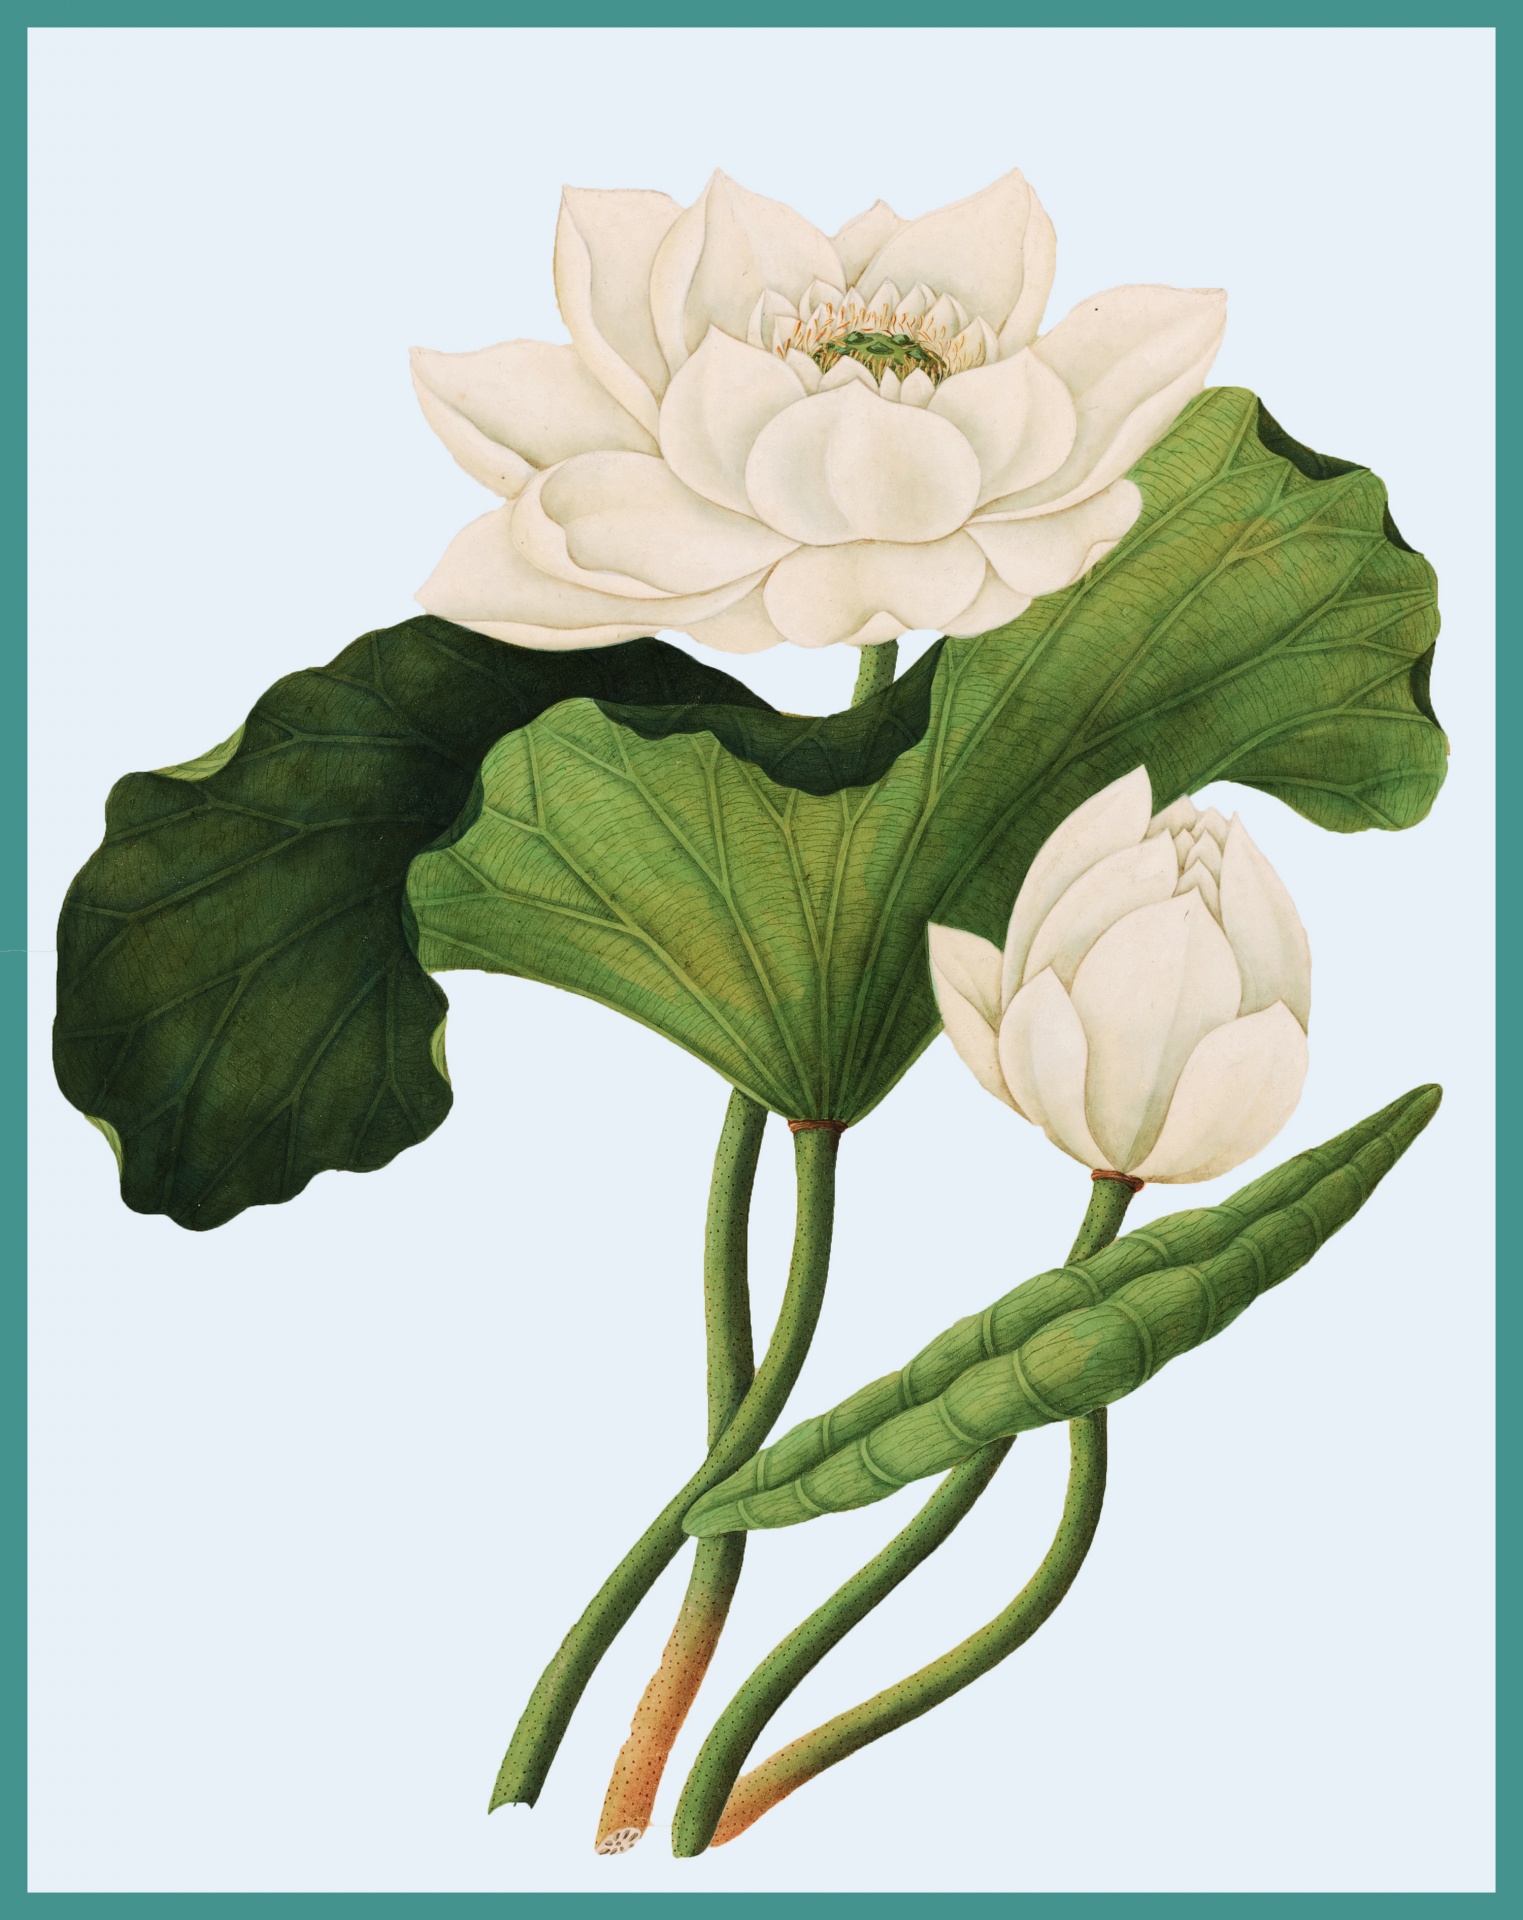 Lotus flower, sacred lotus, east indian lotus vintage art print, poster